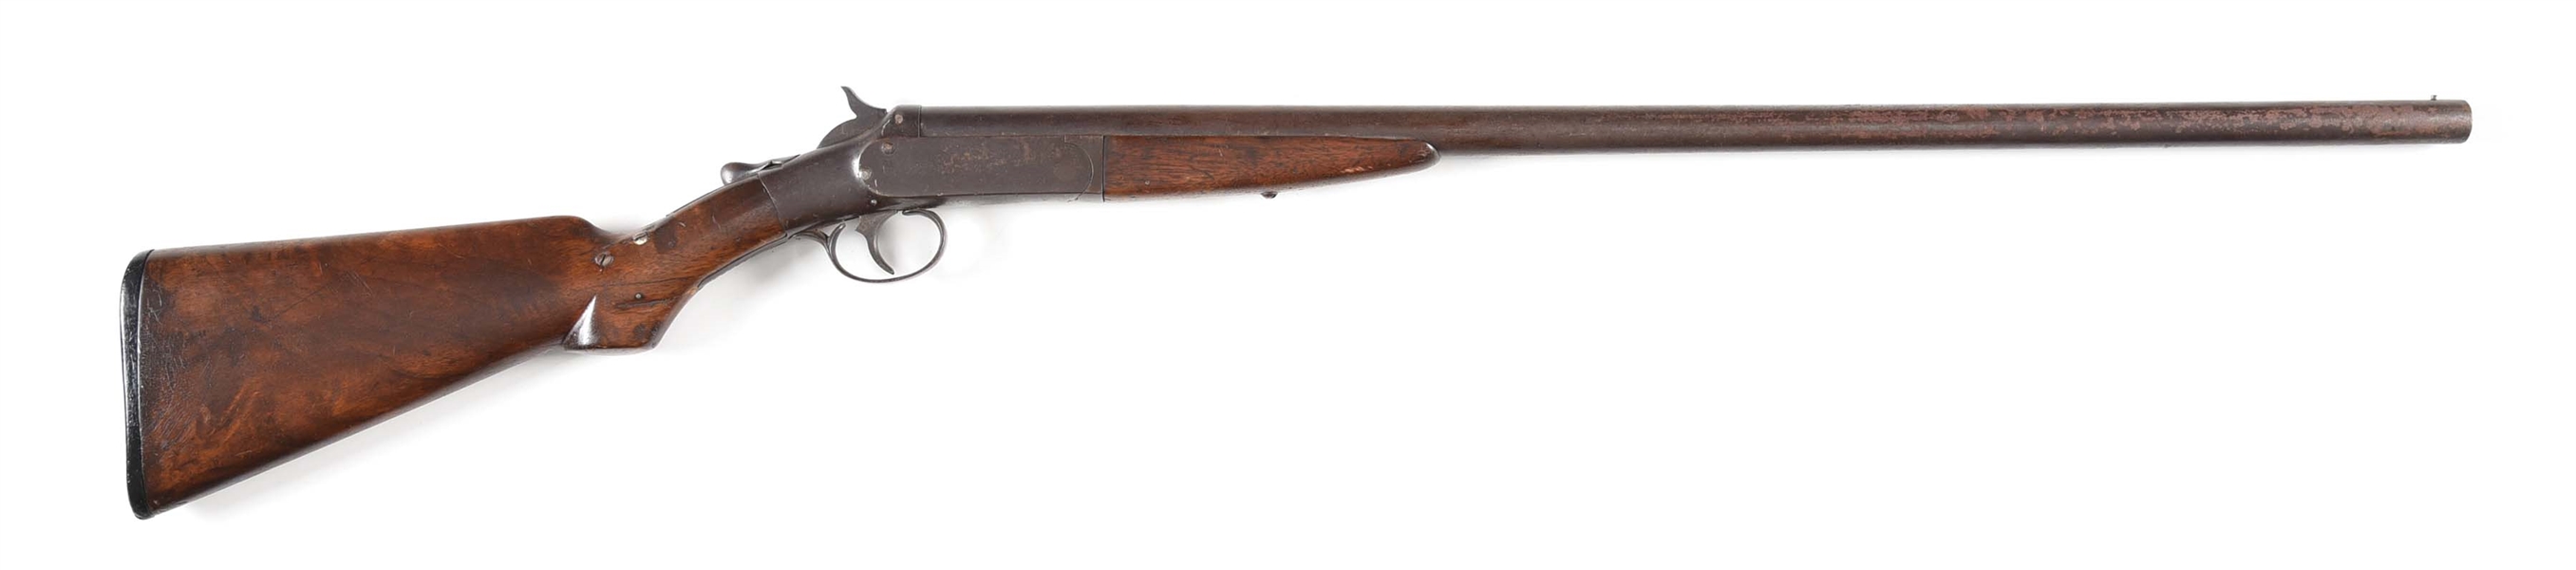 (C) H&R SINGLE SHOT SHOTGUN MARKED "ST. LOUIS WORLDS FAIR 1904".